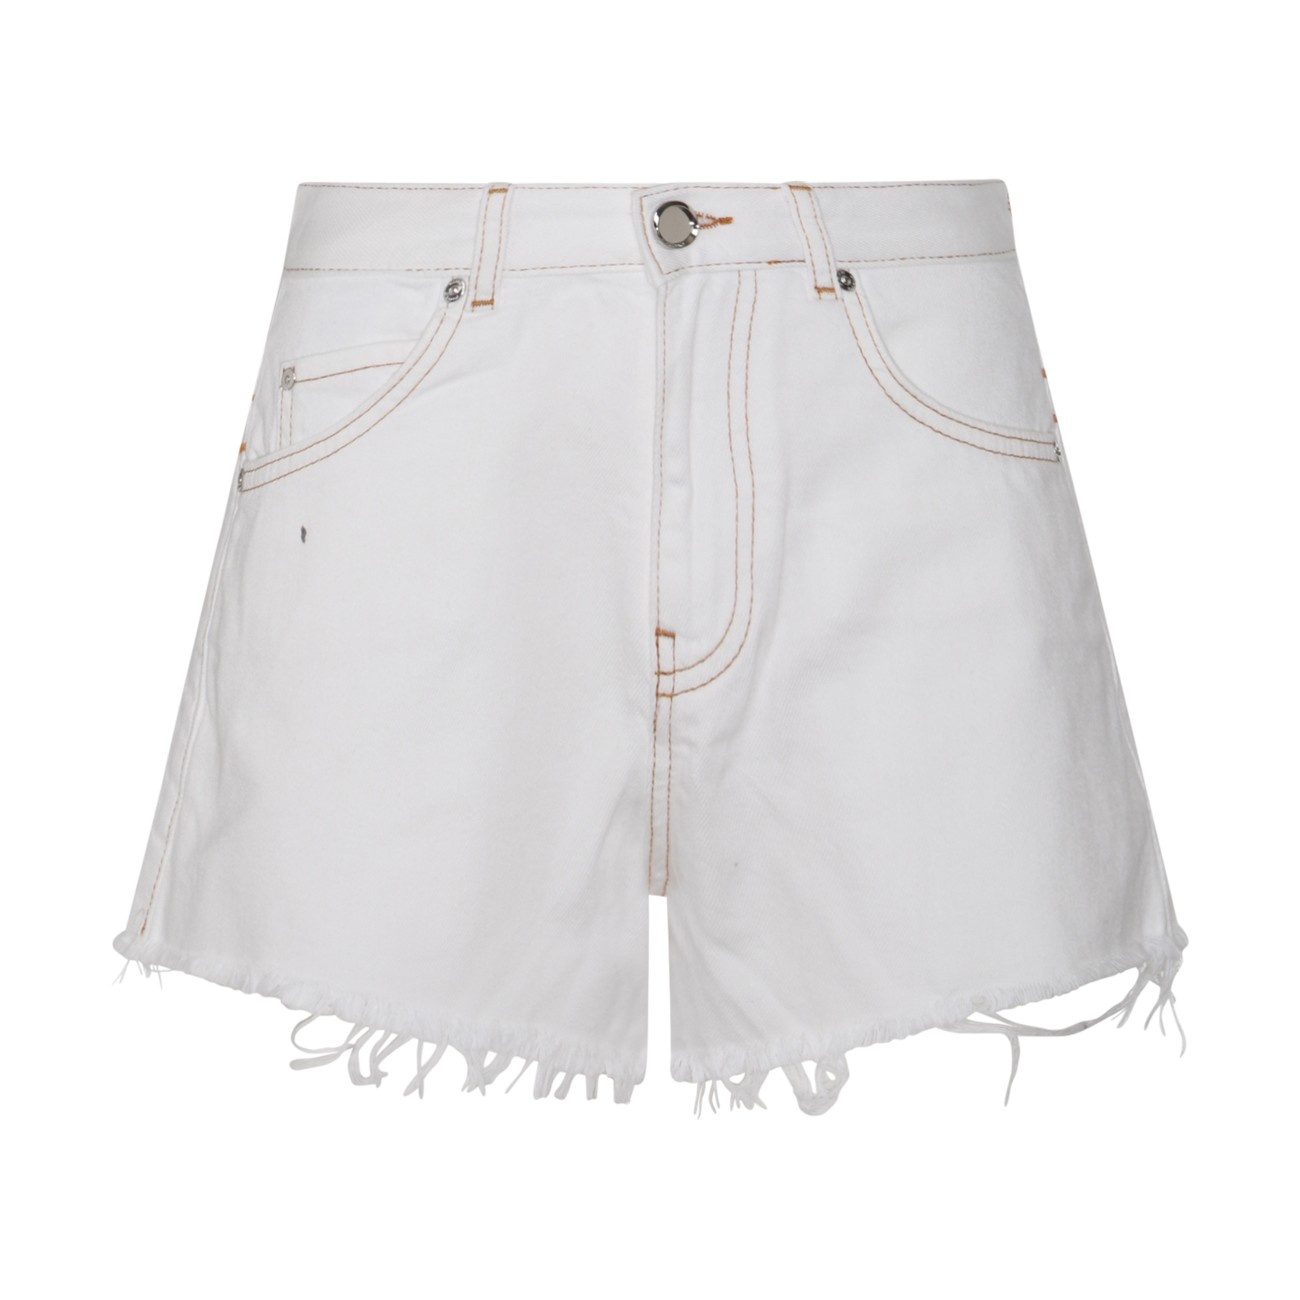 white cotton shorts - 1